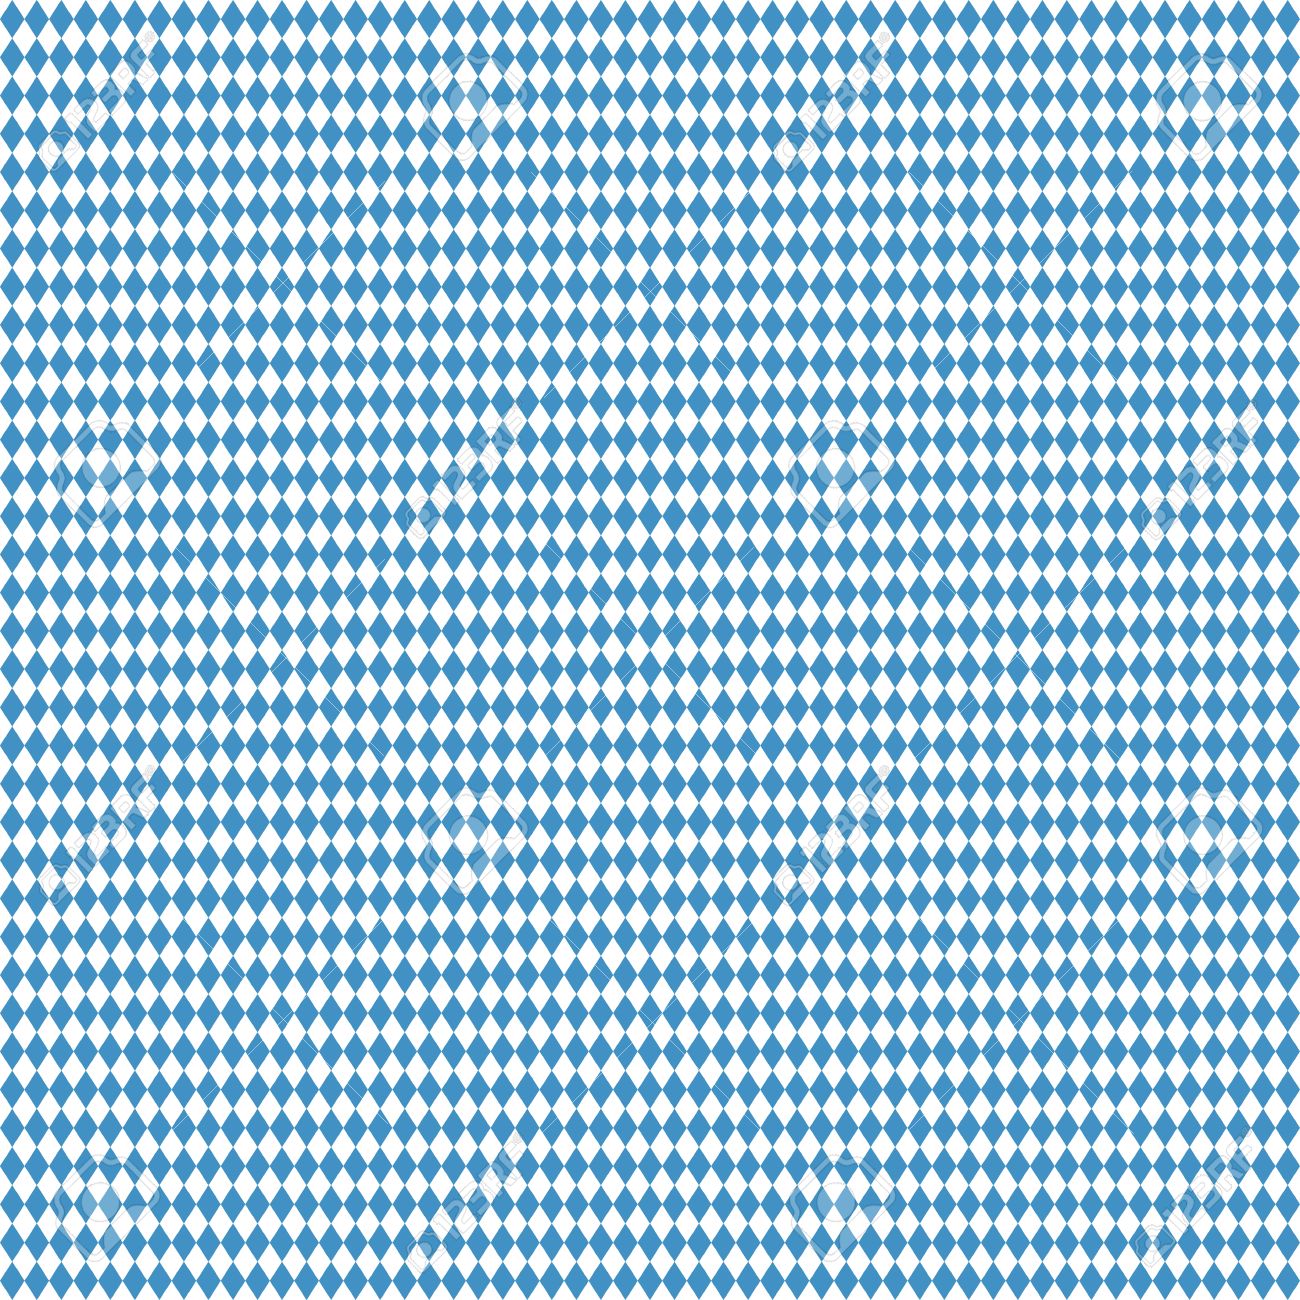 Oktoberfest Background With Seamless Blue White Checkered Pattern